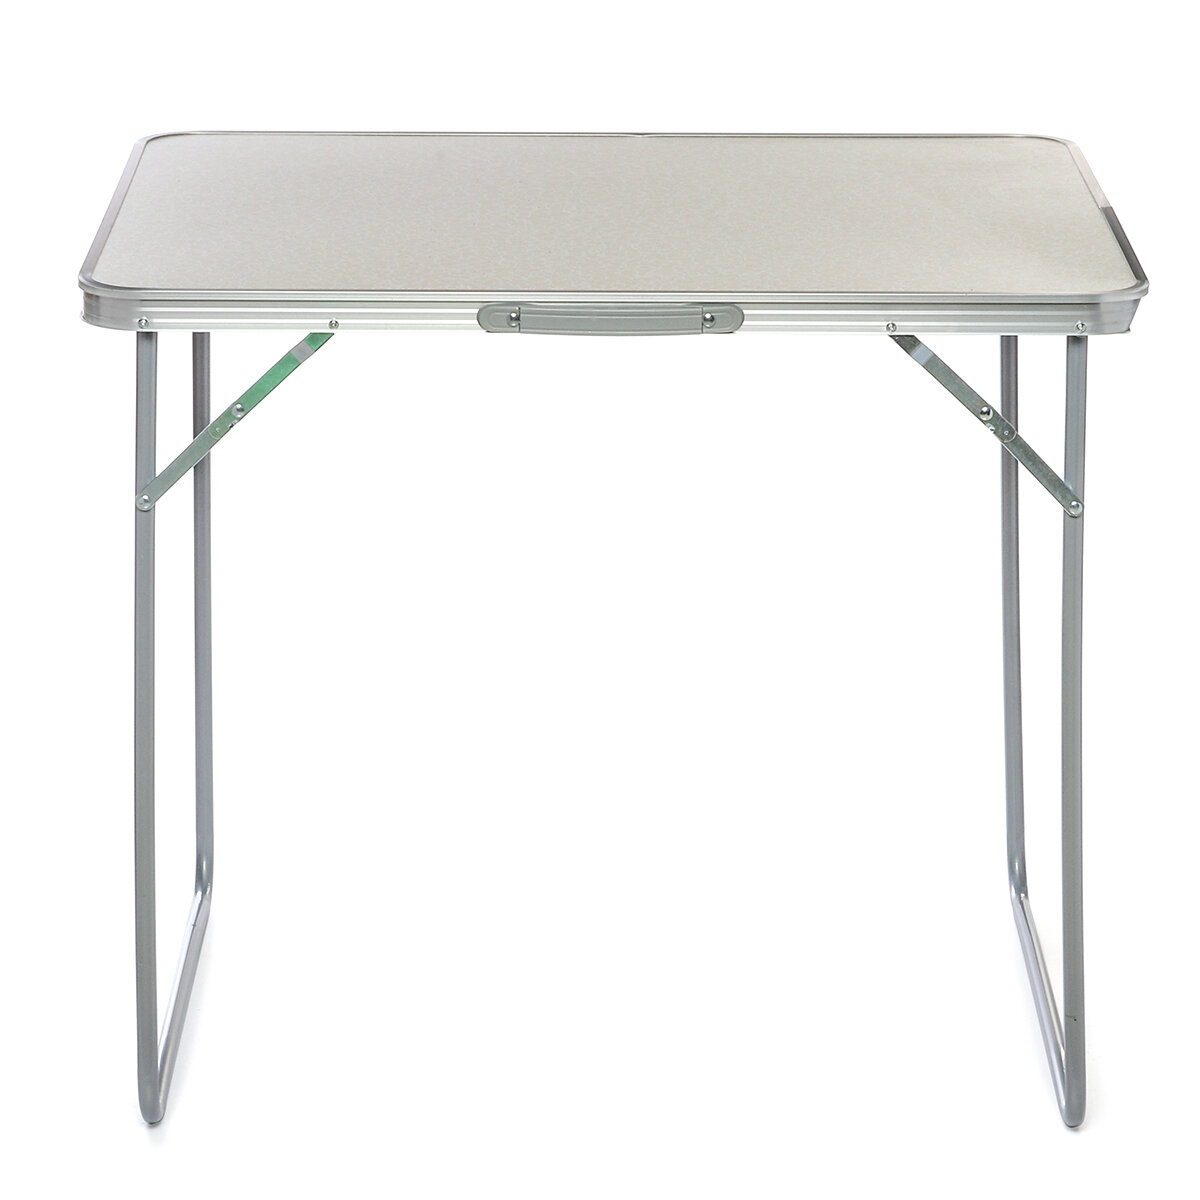 Portable folding table laptop desk study table aluminum camping table ...